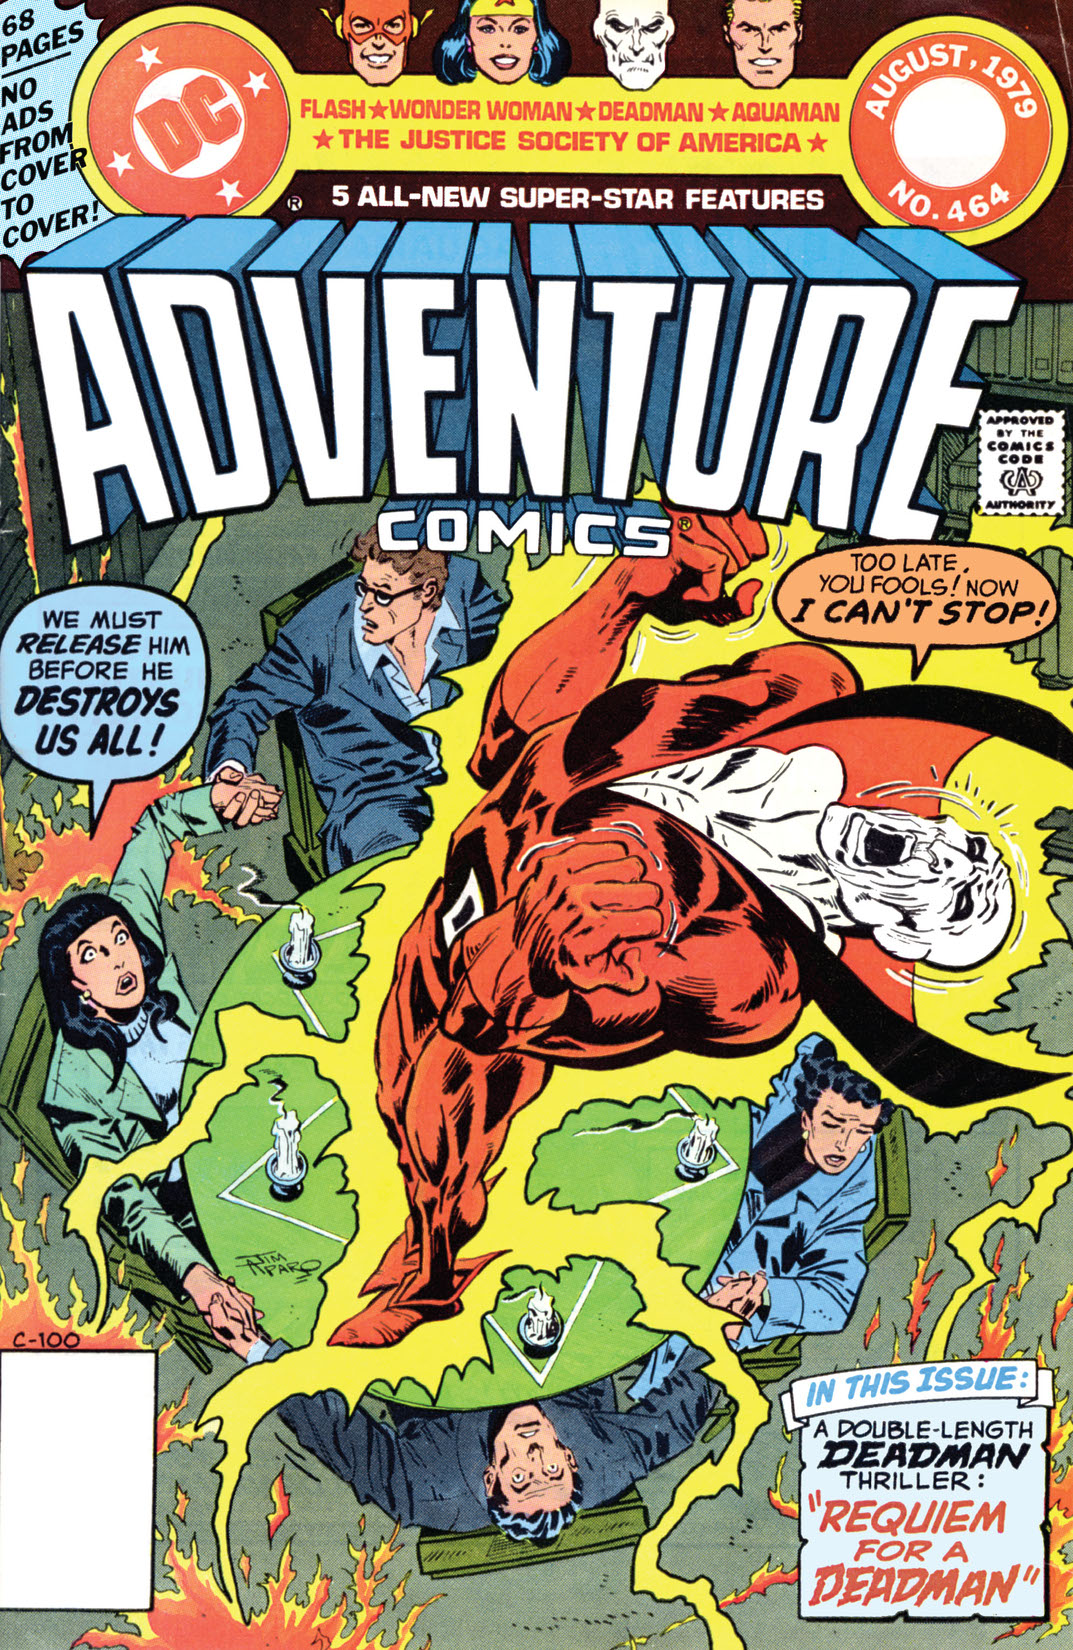 Adventure Comics (1938-) #464 preview images